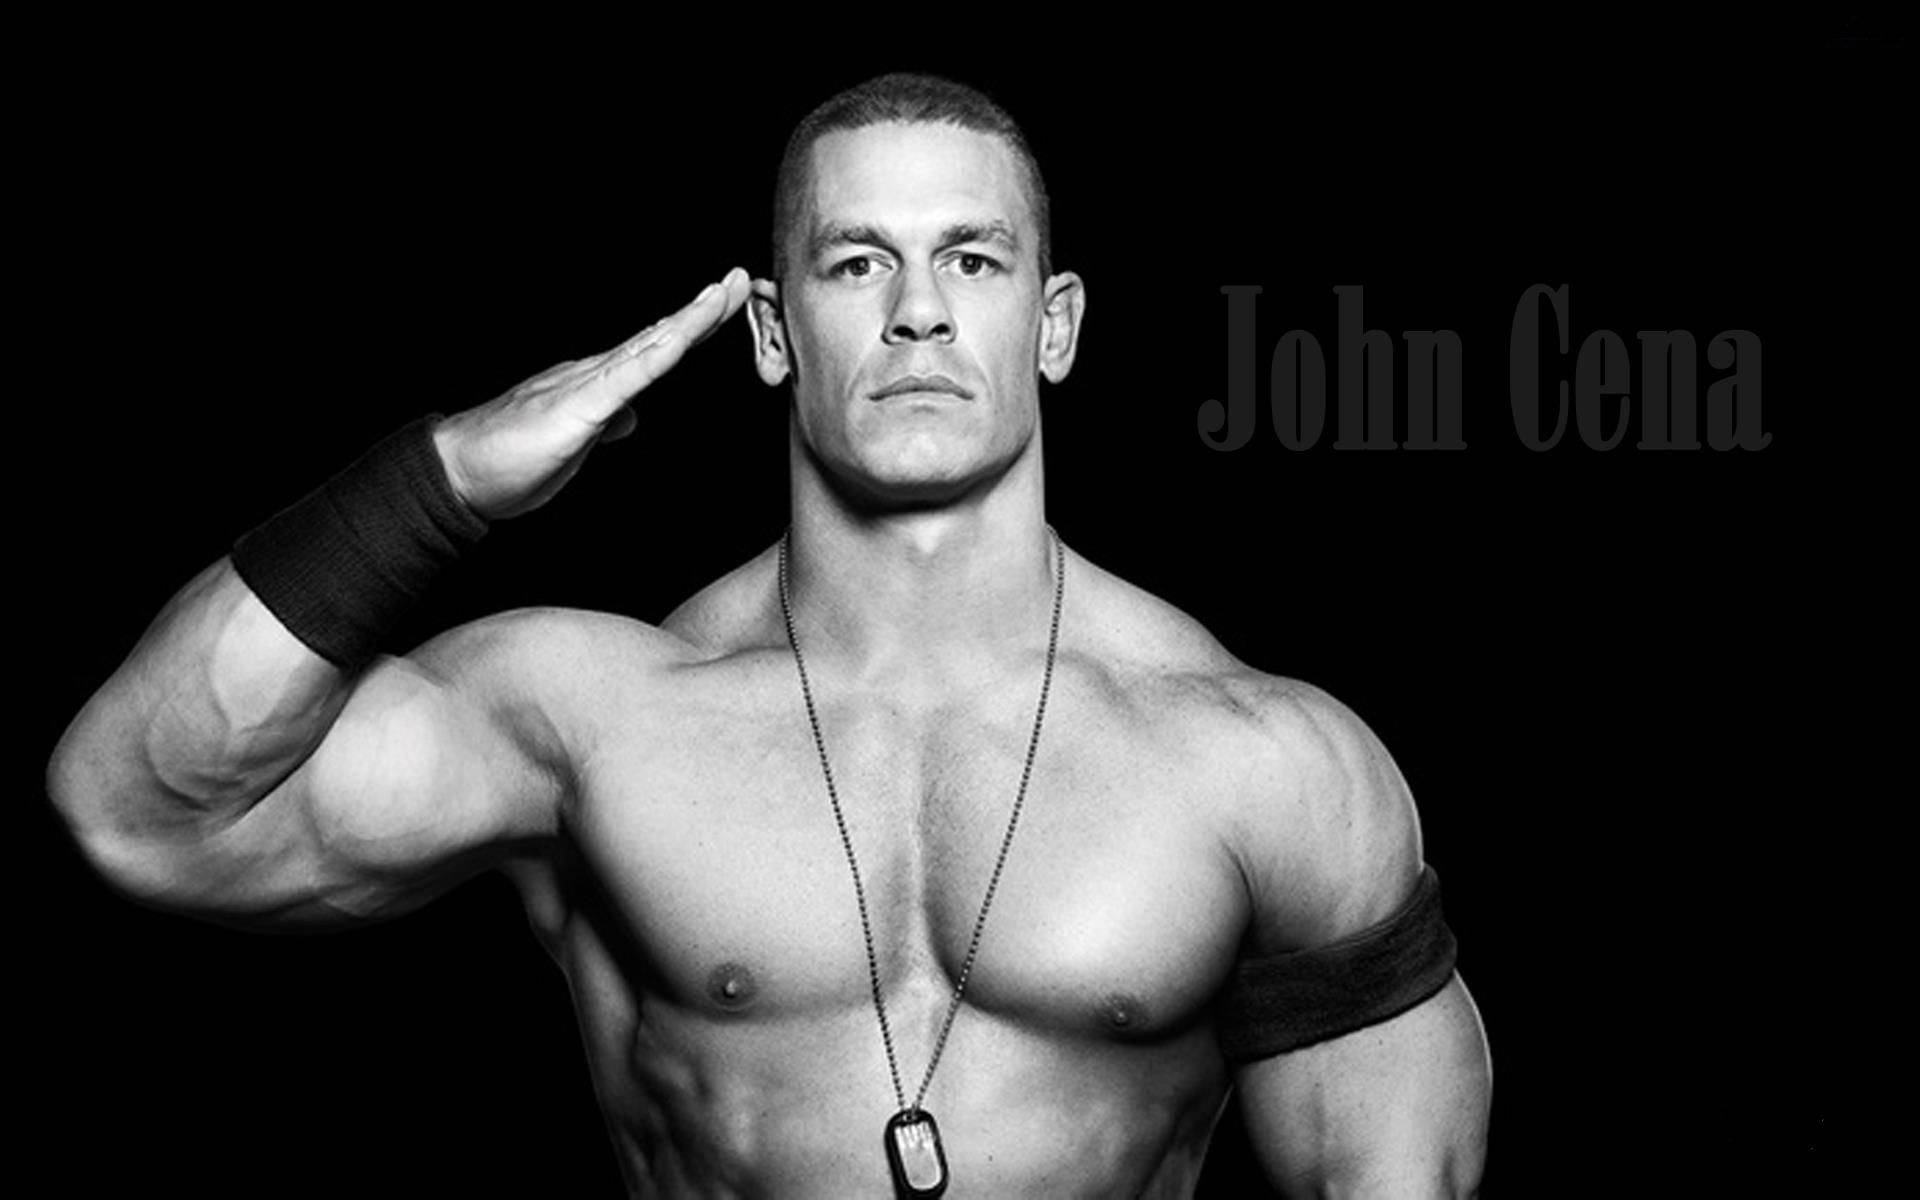 John Cena In Black And White Background